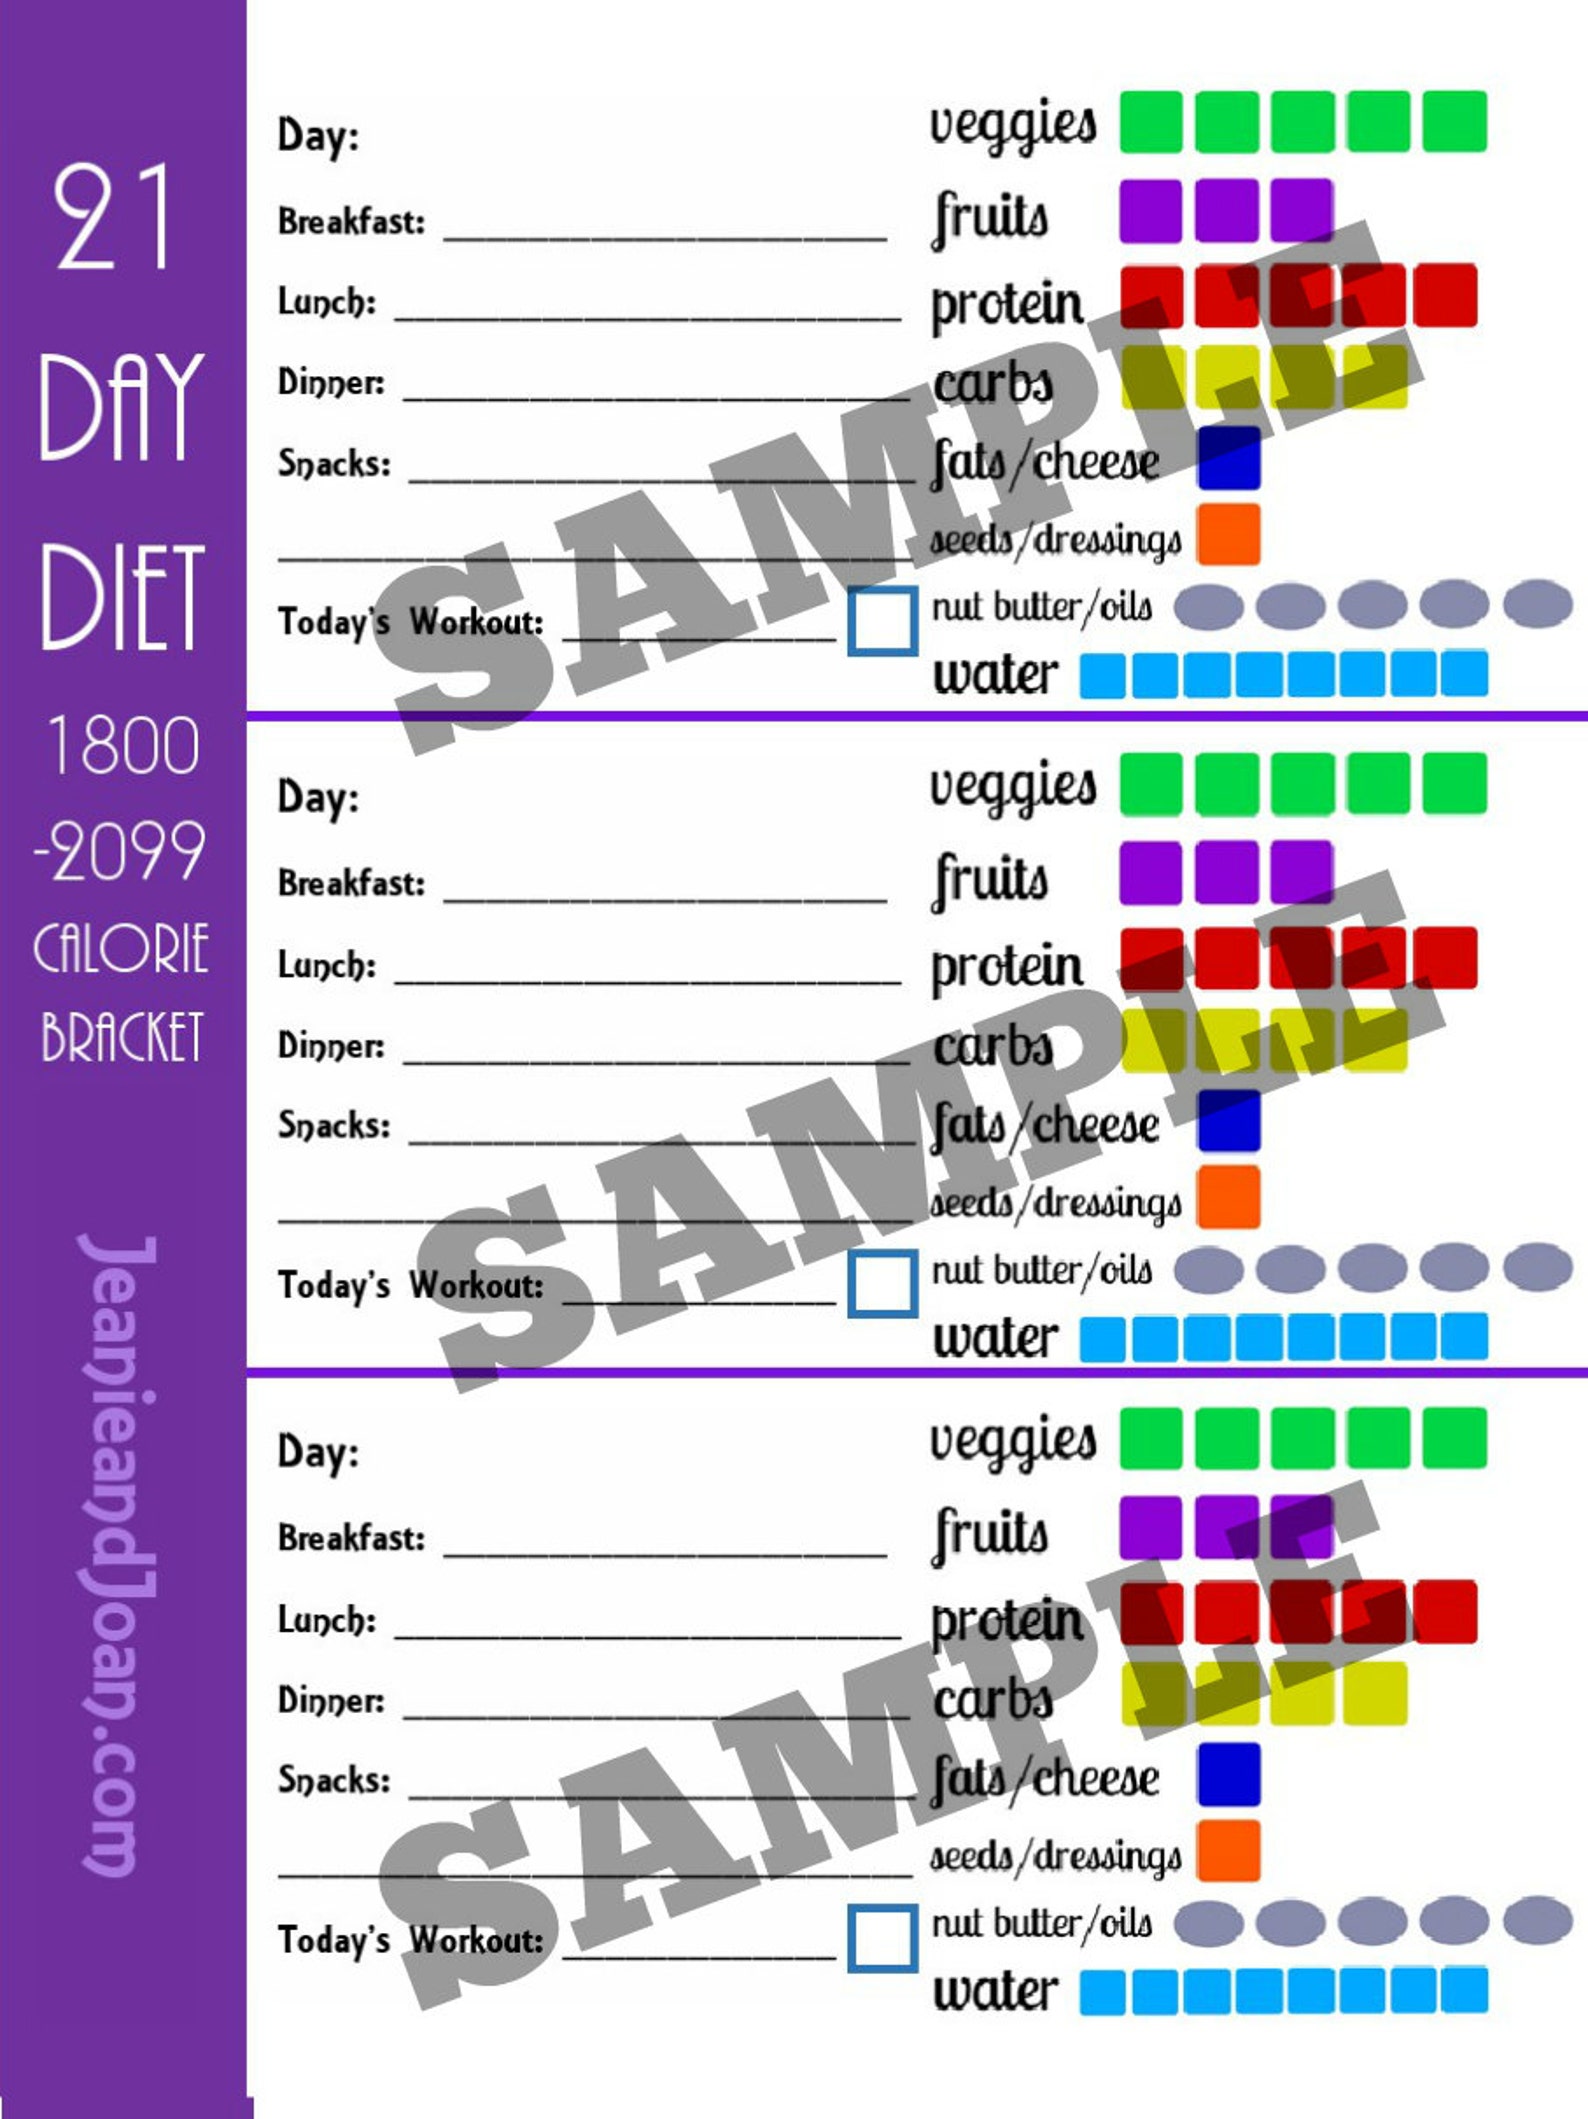 21 Day 1800-2099 Calorie Diet Plan 5 Page PDF BUNDLE: Menu and Workout ...